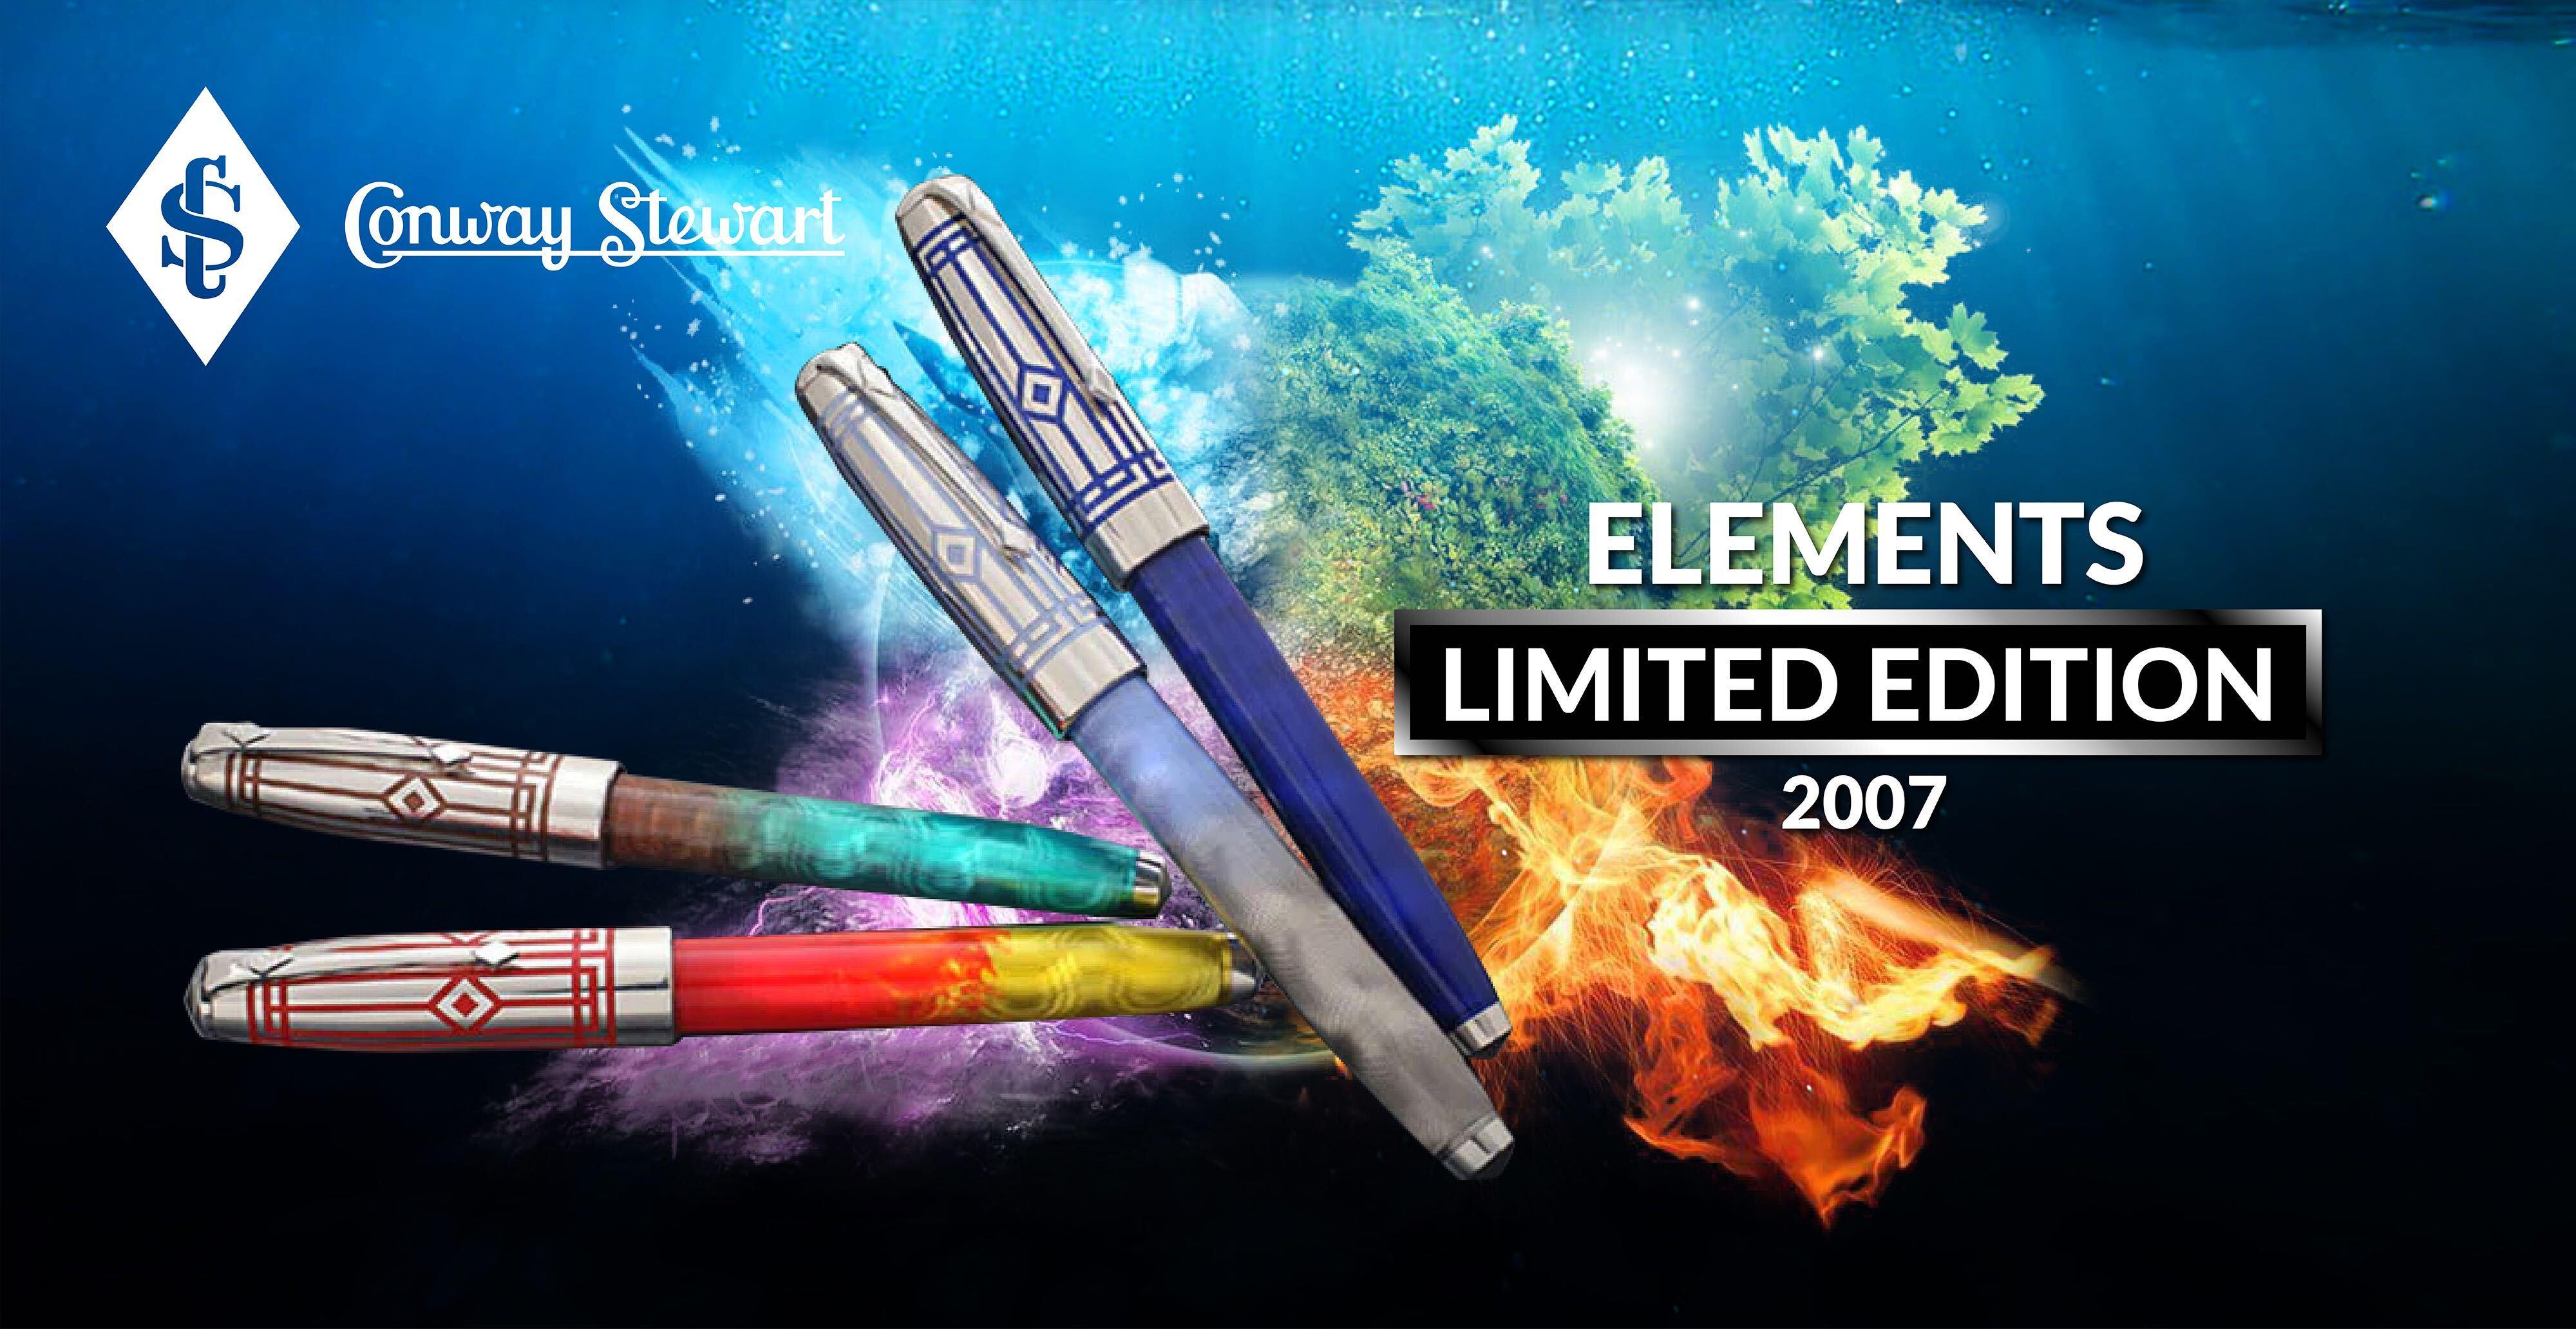 Elements Limited Edition, 2007 conwaystewart.com